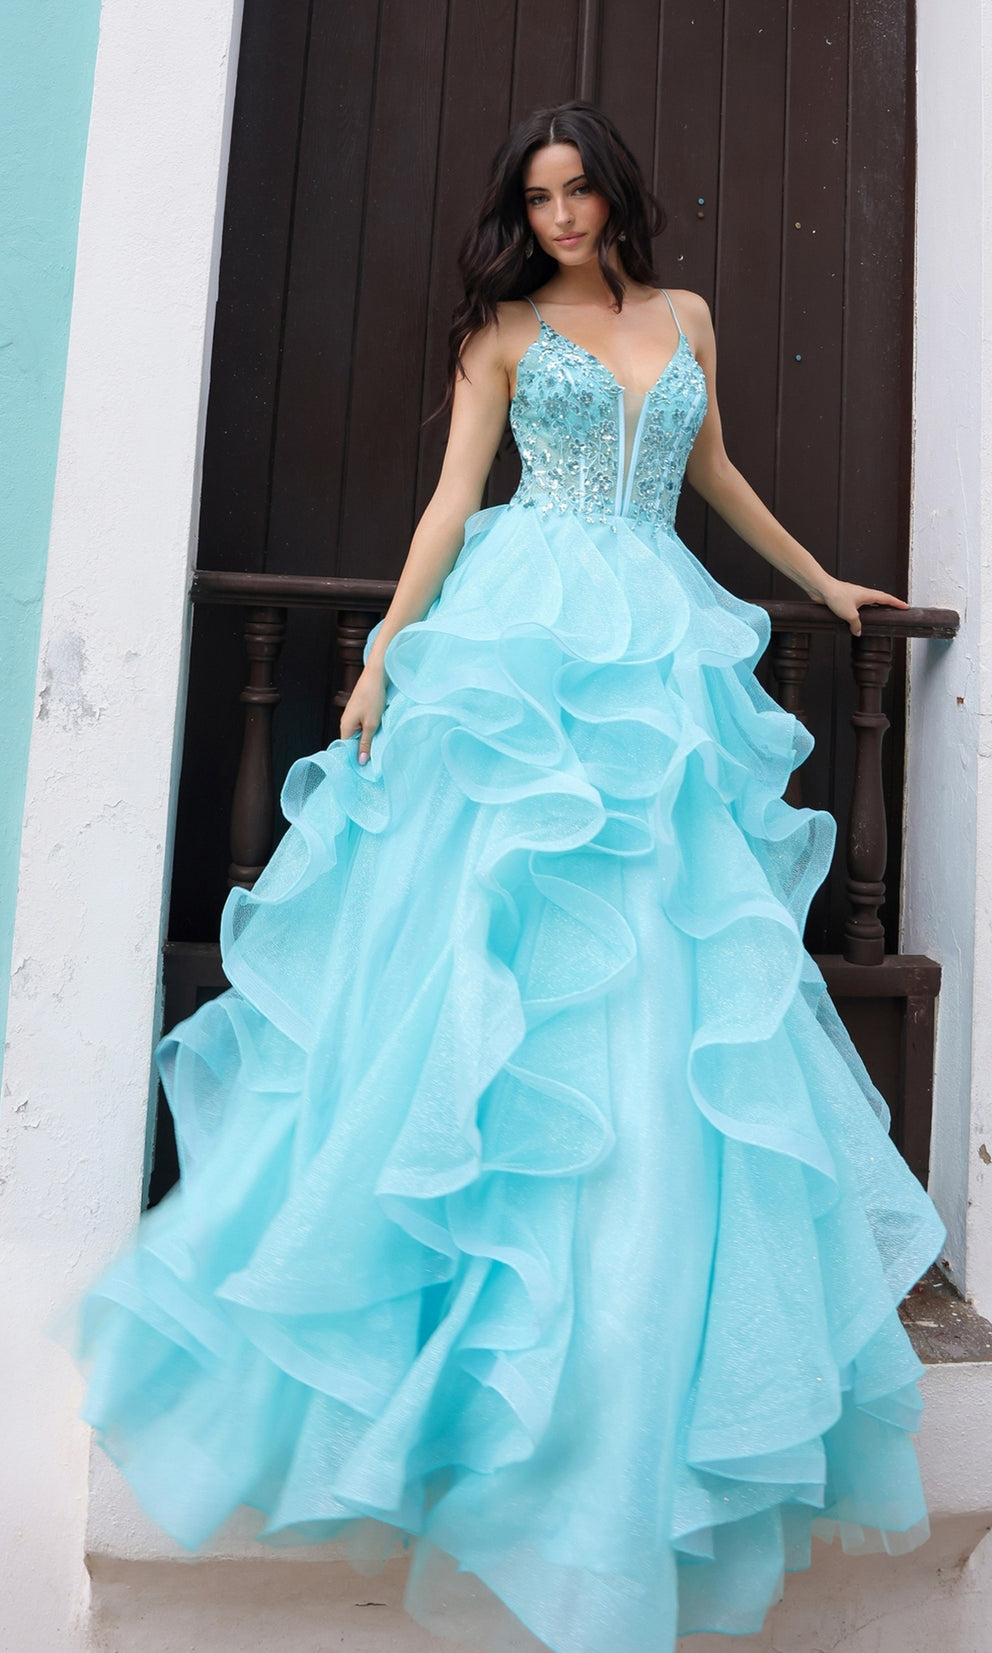 KAROLINA Aqua Blue Tulle Frilly Corset Back Ball Gown School Formal & Prom Dress